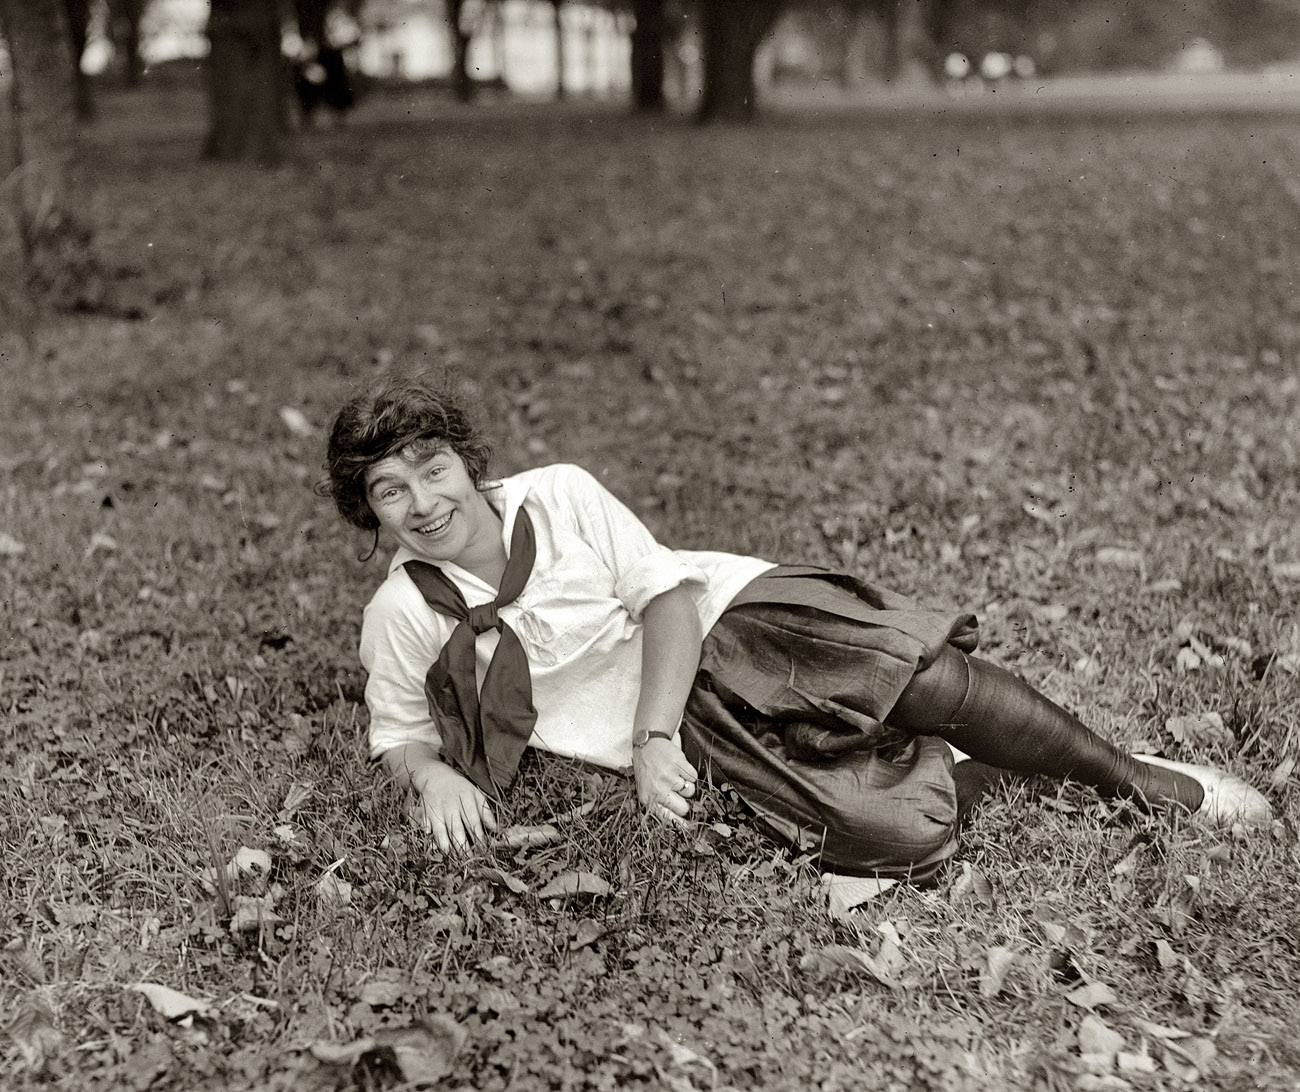 Washington, D.C. October 10, 1919. "Girls' baseball." View full size. National Photo Company Collection glass negative.